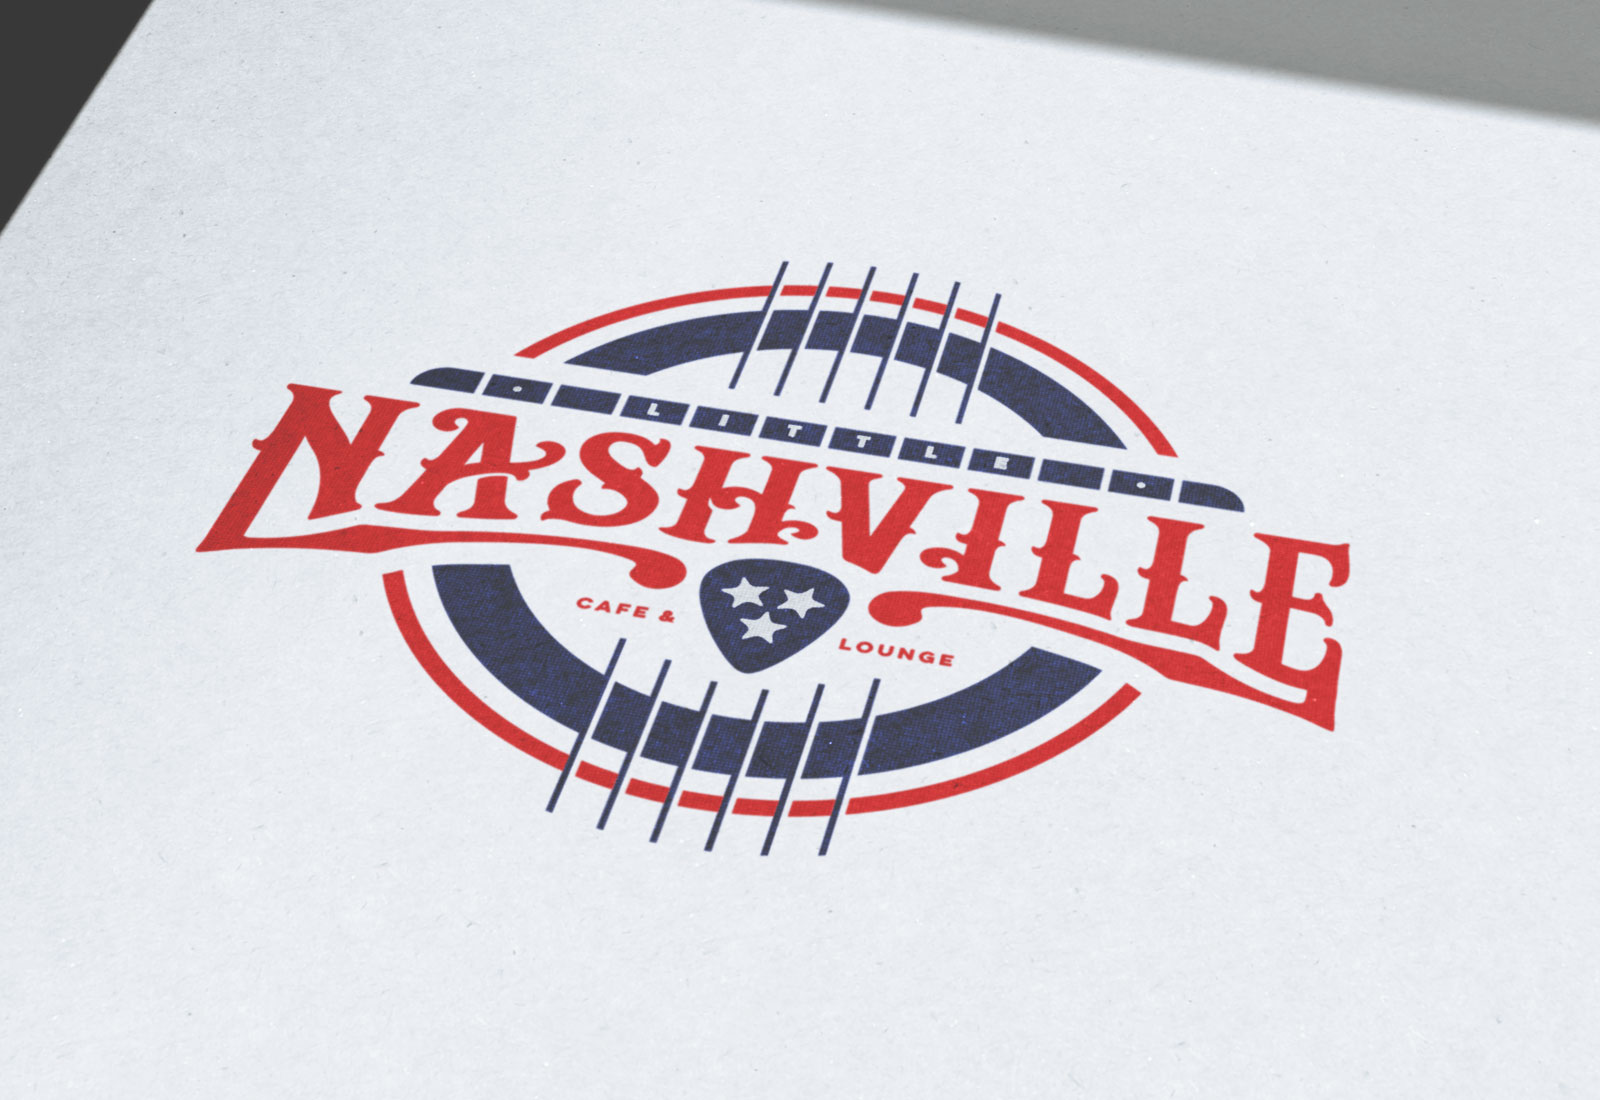 Little Nashvill Logo Design On Printed Paper